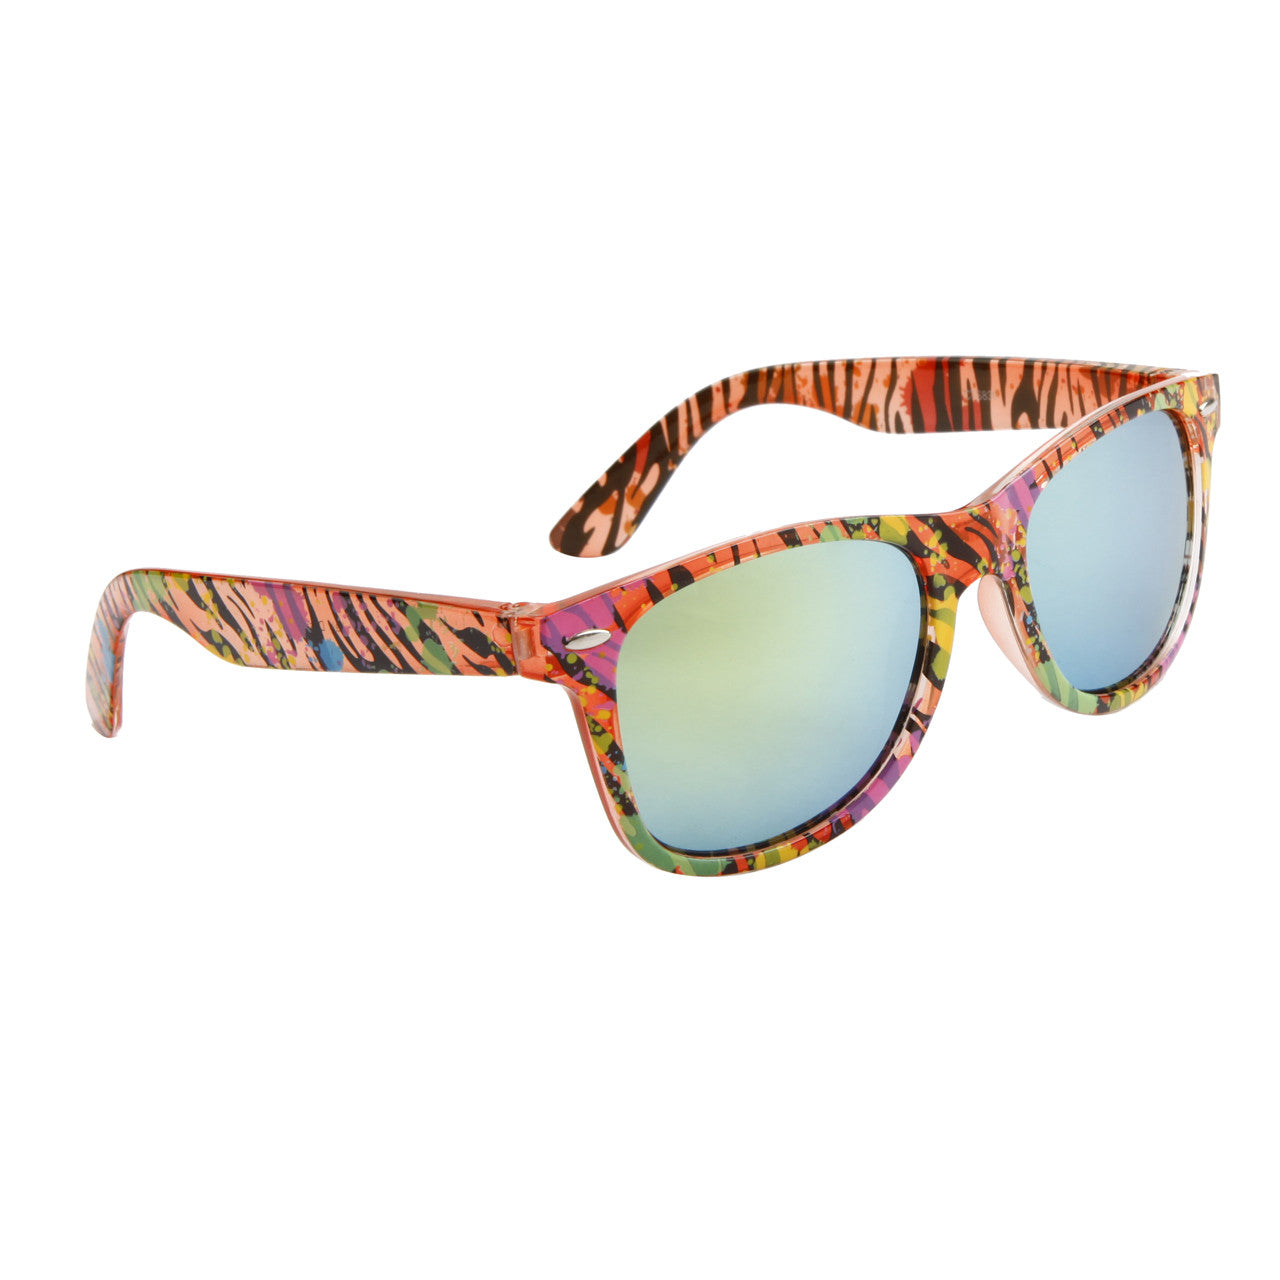 Neon Zebra Print w/ Splattered Paint Mirrored Wayfarer Sunglasses